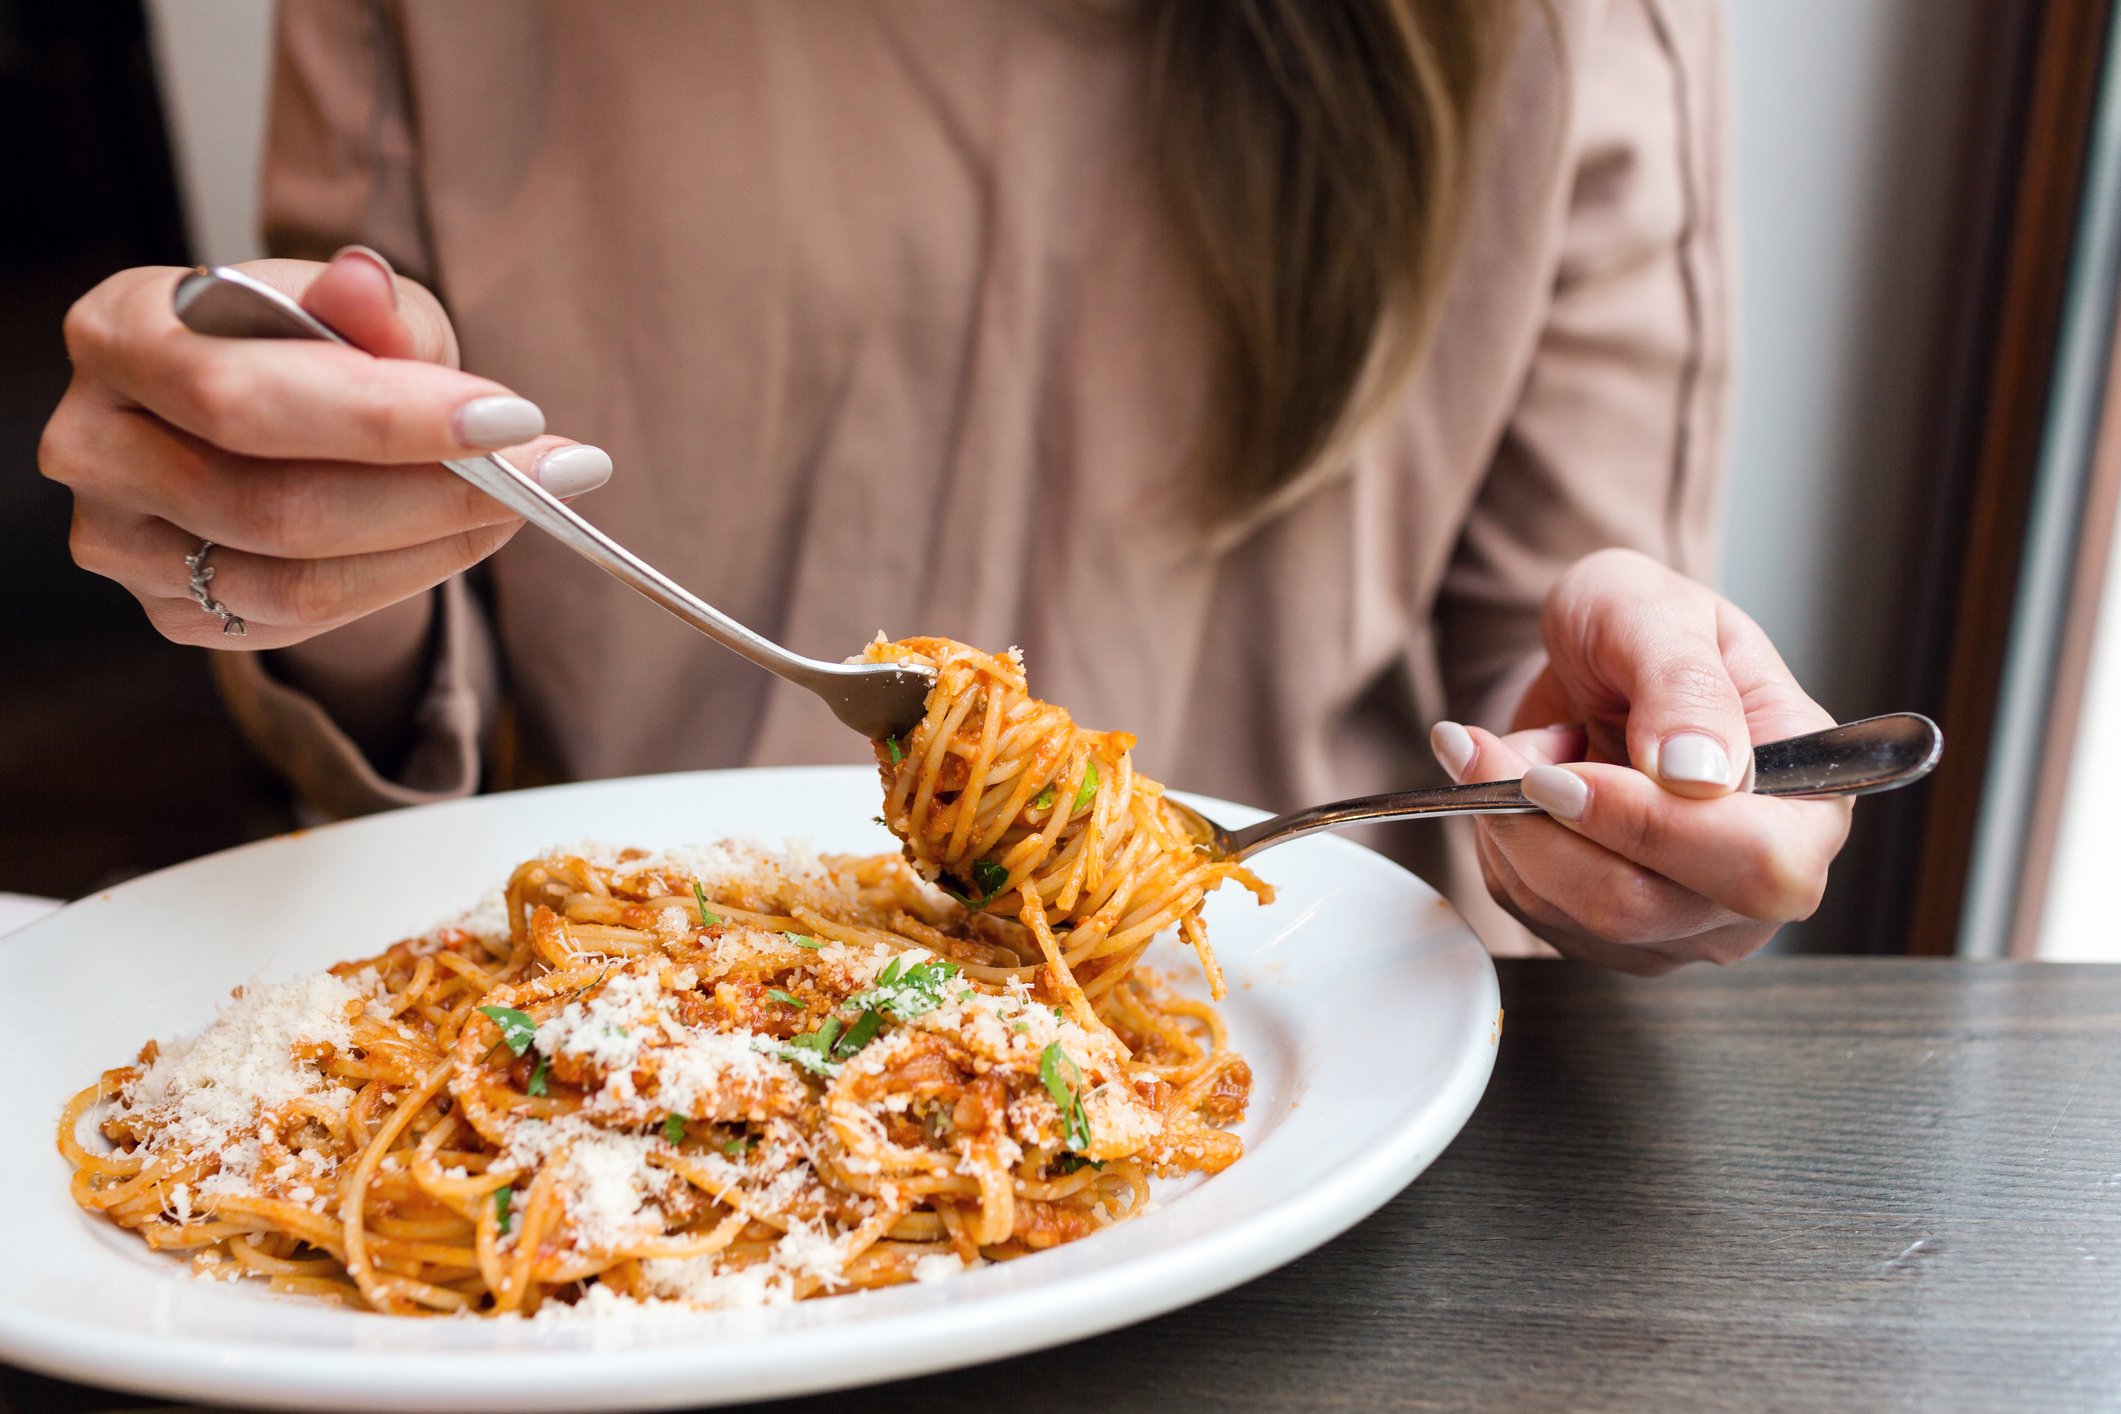 Taste the Essence of Italy at the Best Frisco Italian Restaurant